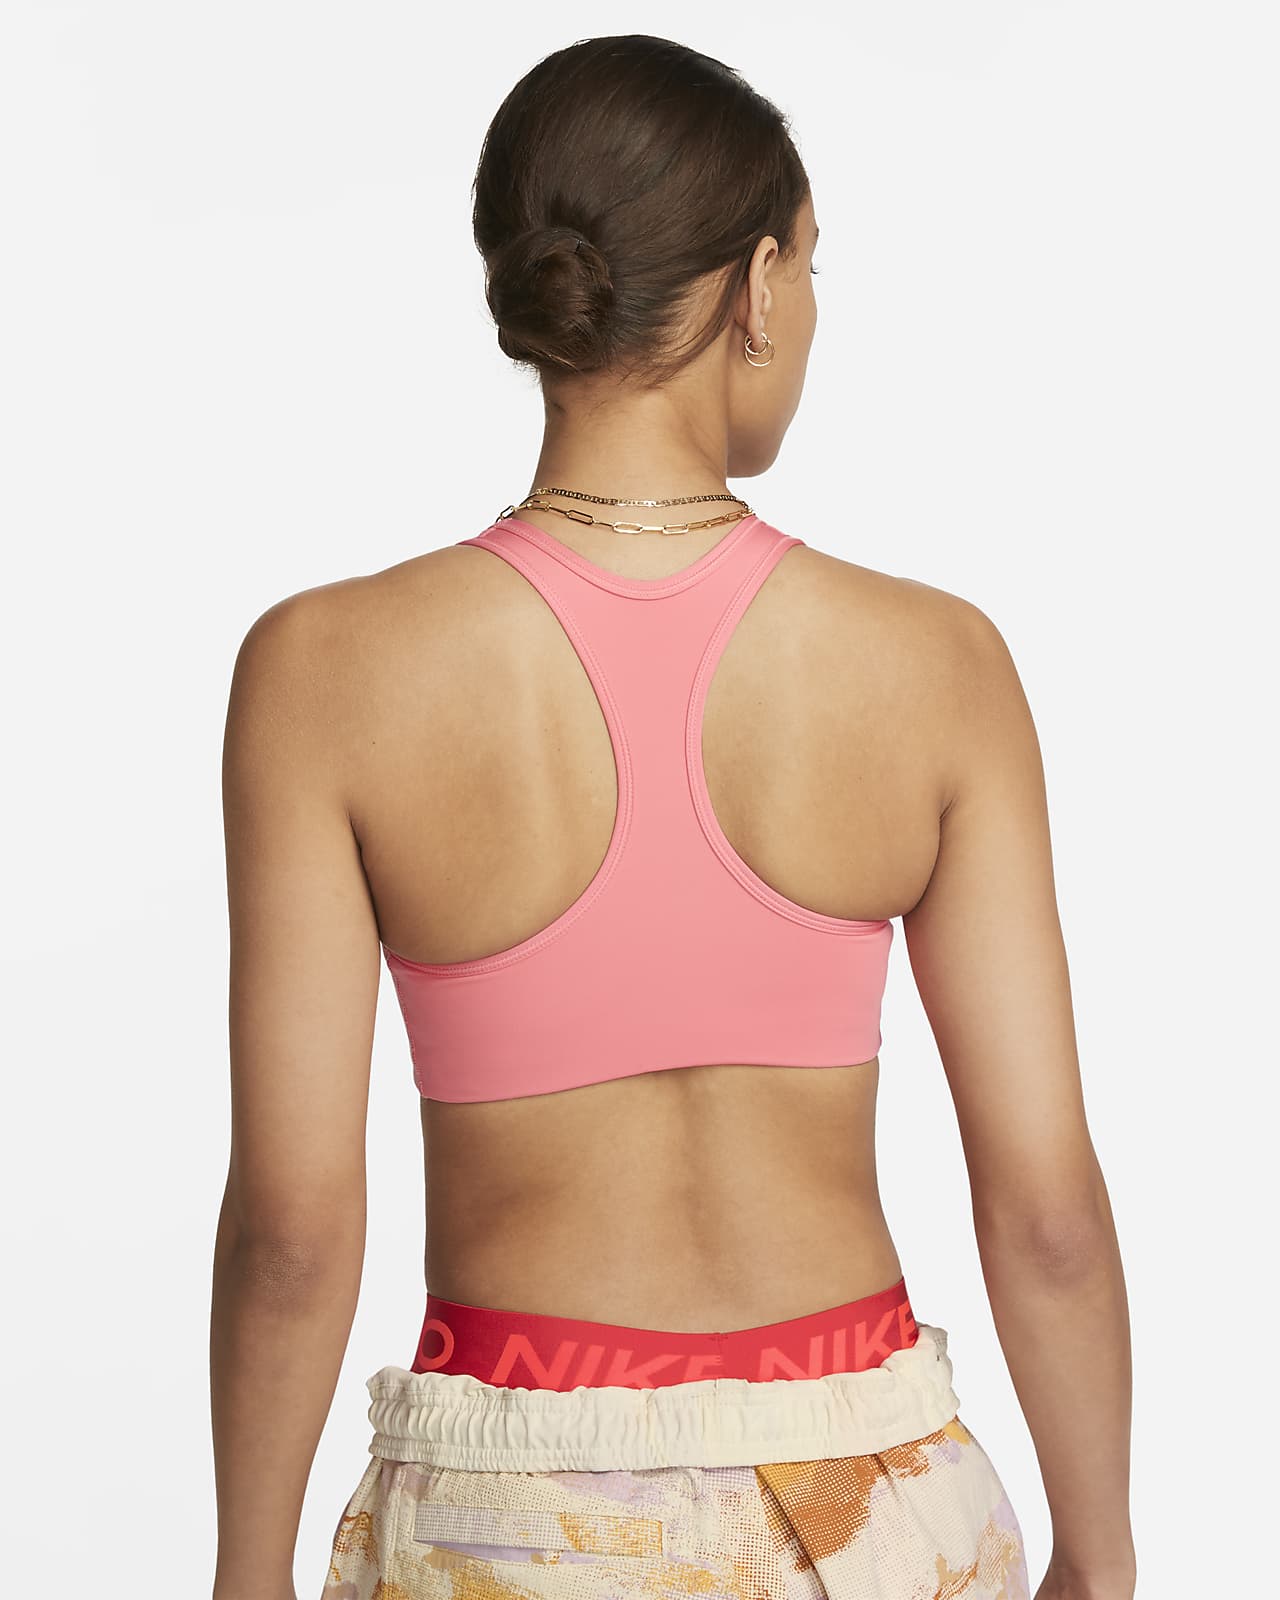 Women's Medium-Support 1-Piece Pad Sports Bra. Nike.com